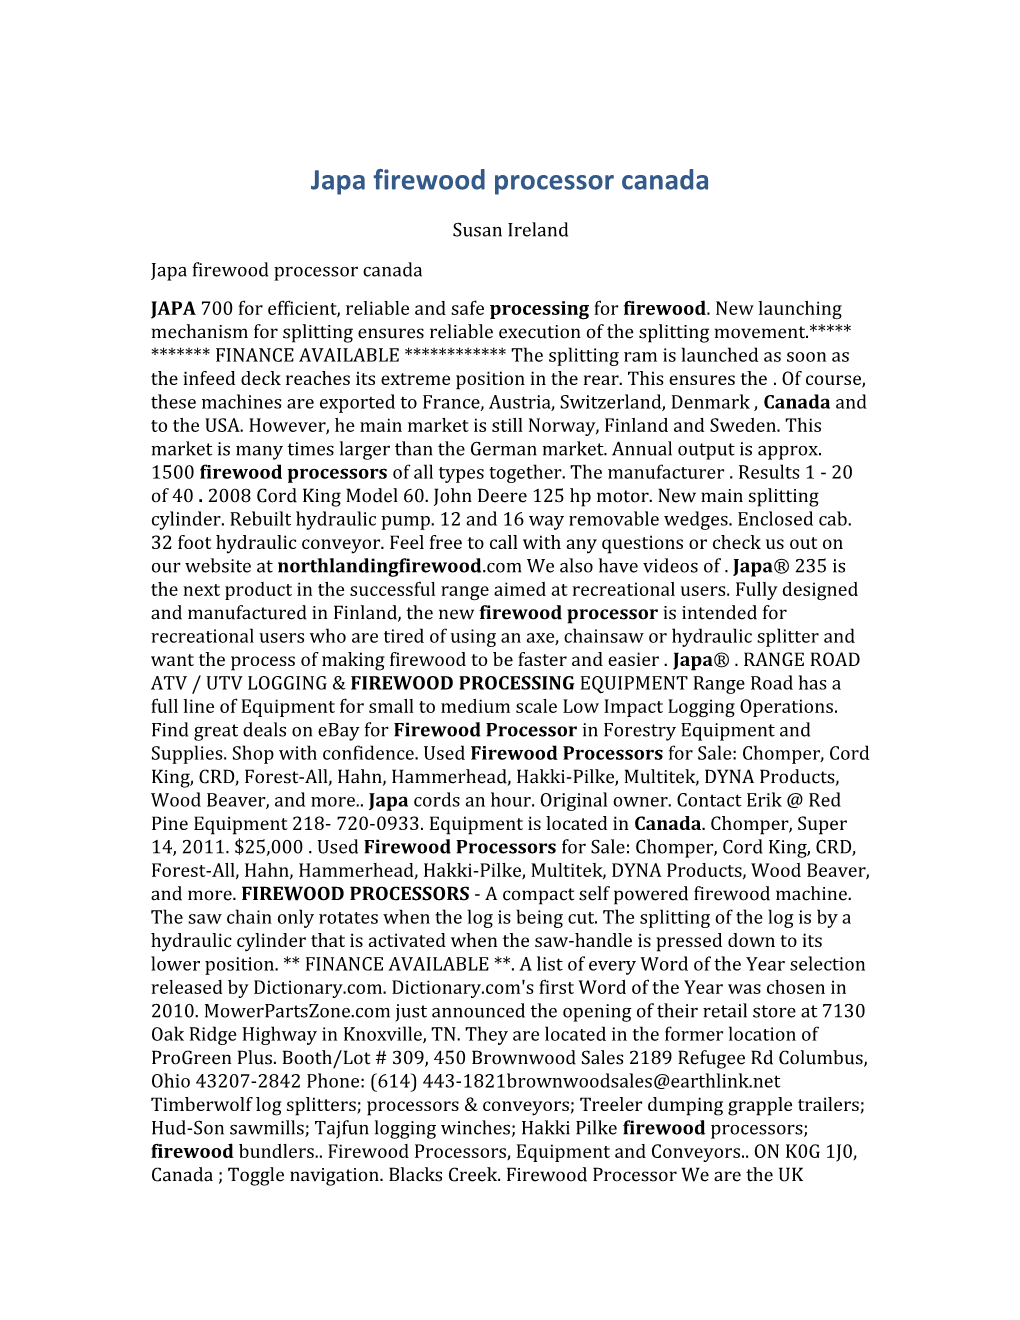 Japa Firewood Processor Canada